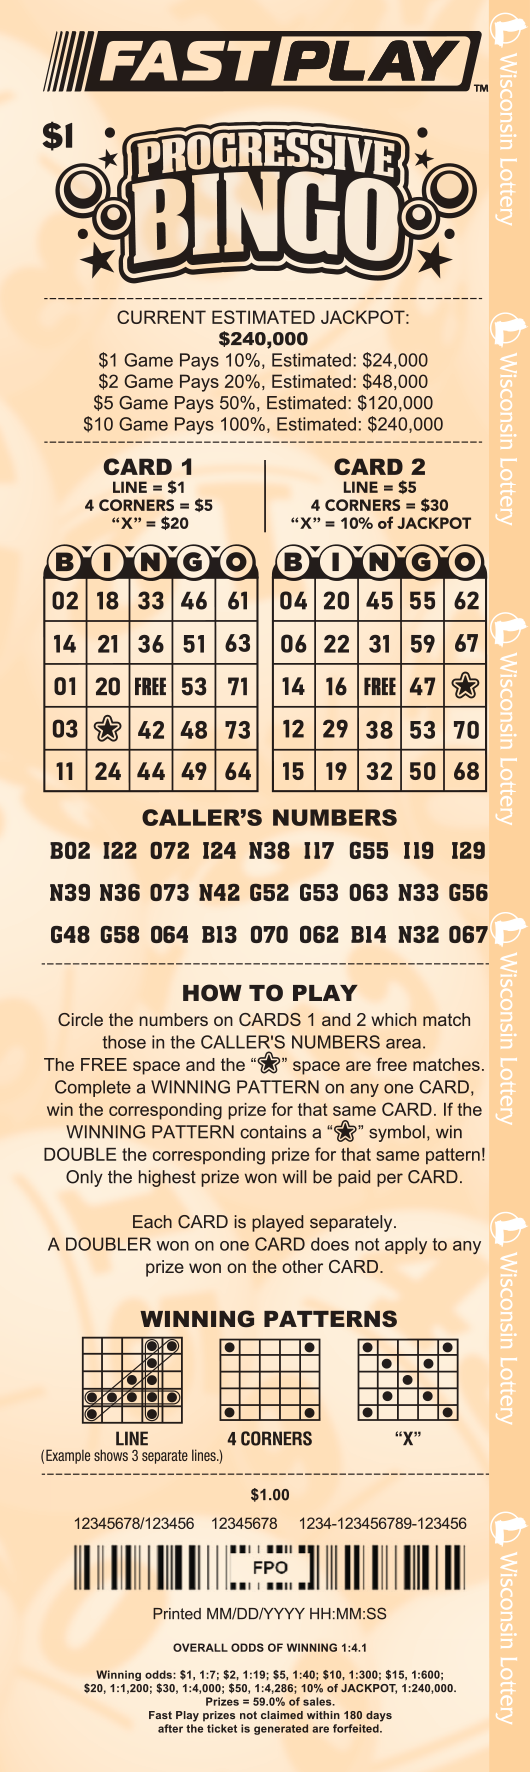 Wisconsin Lottery Fast Play Progressive Bingo ticket with black ink